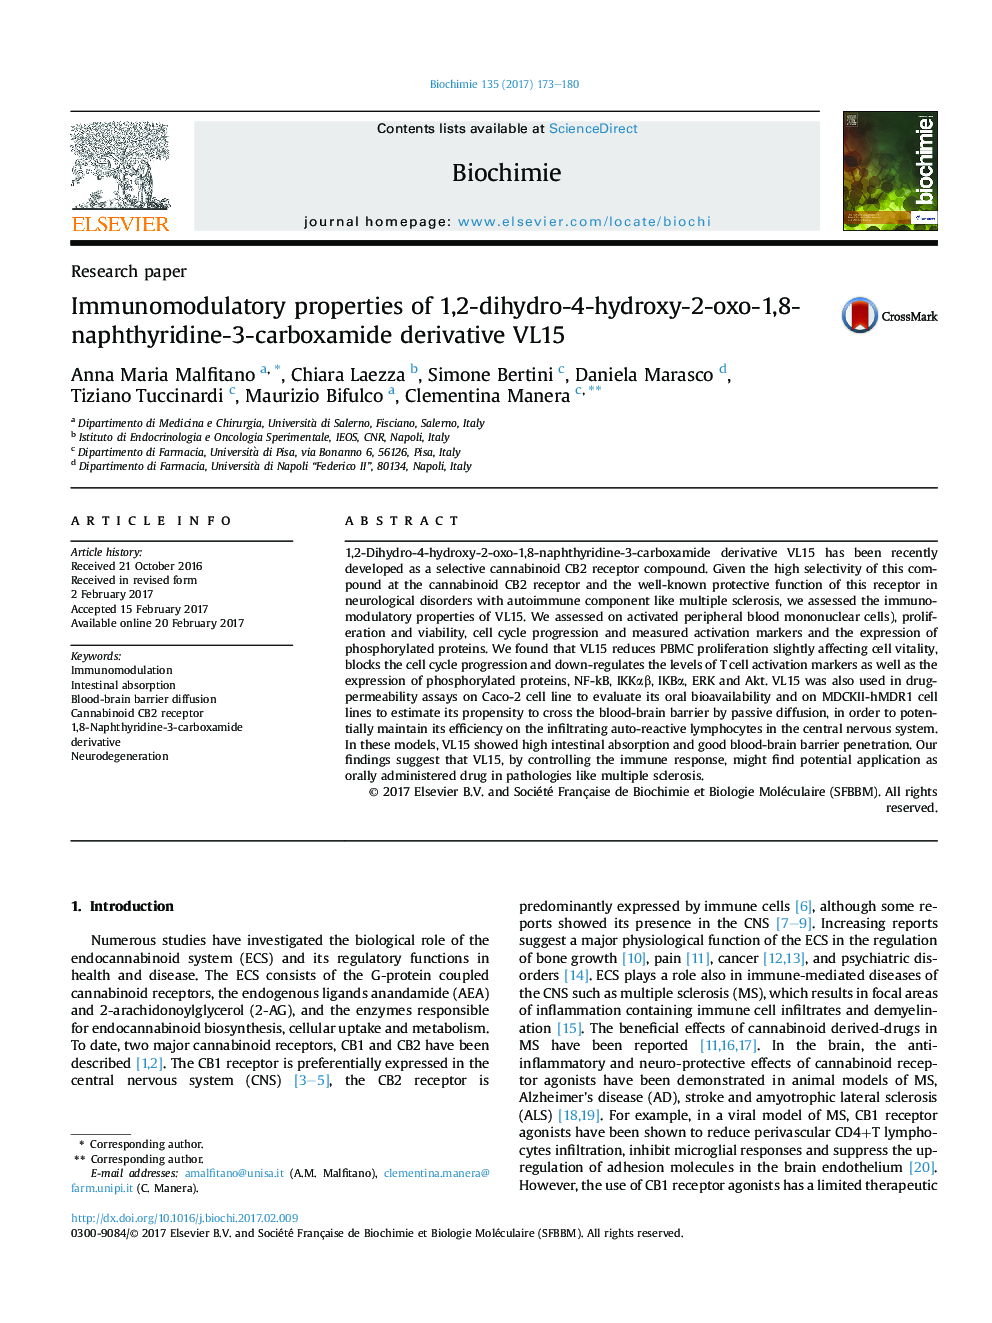 Research paperImmunomodulatory properties of 1,2-dihydro-4-hydroxy-2-oxo-1,8-naphthyridine-3-carboxamide derivative VL15